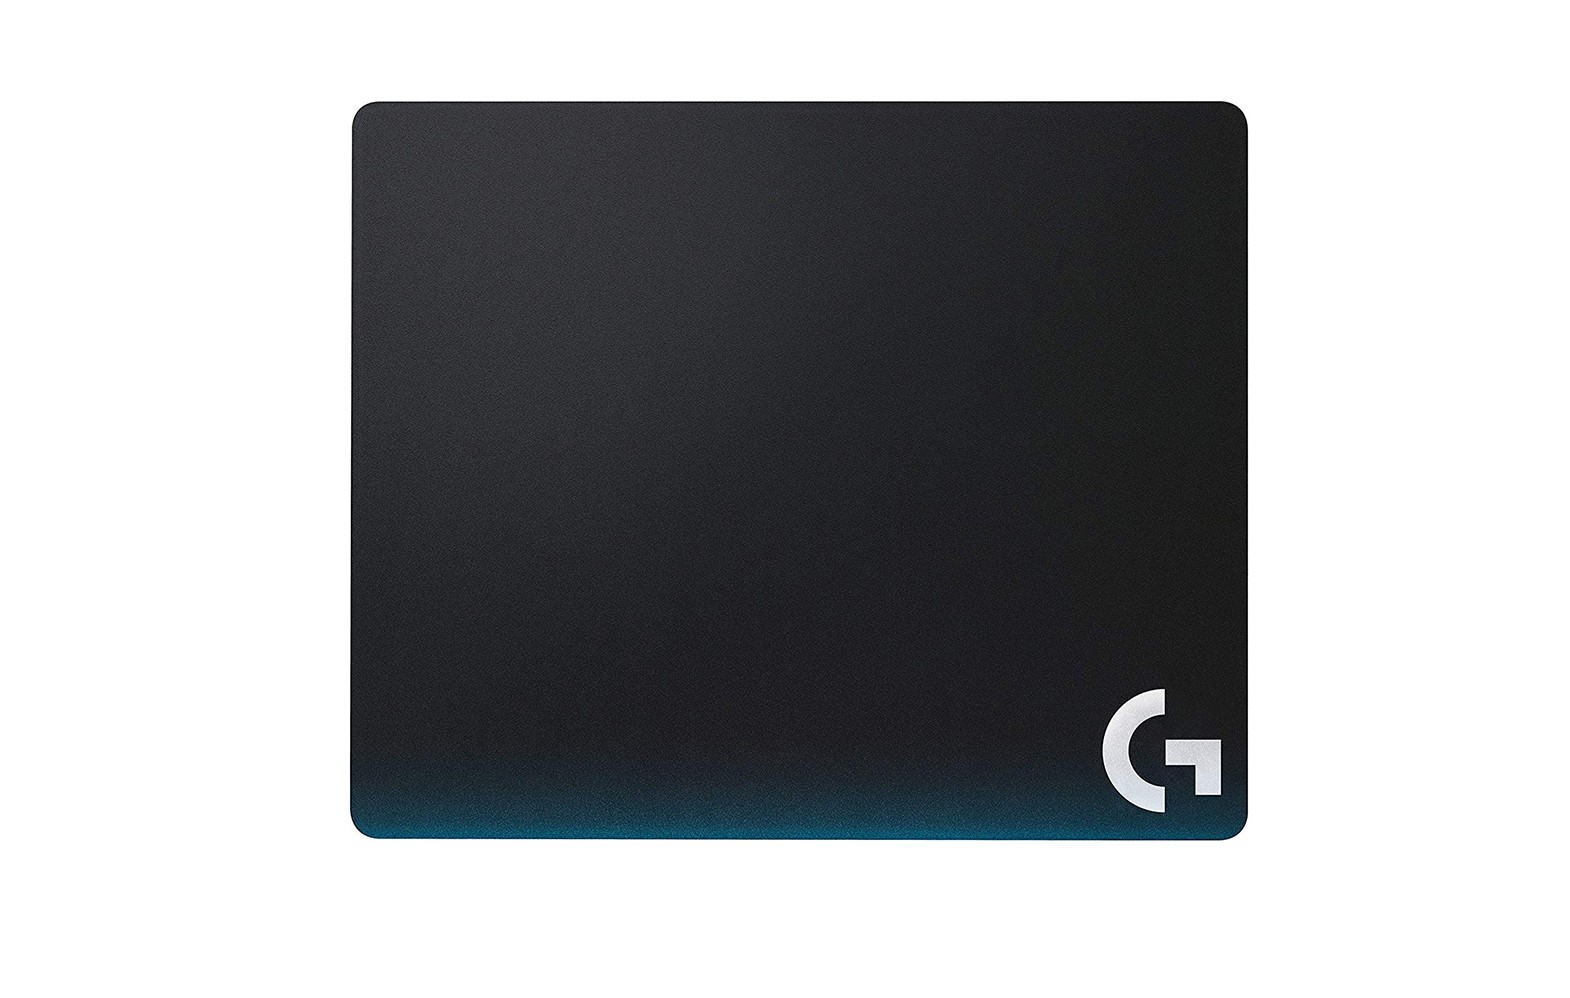 LOGITECH G440 Hard Gaming Mouse Pad